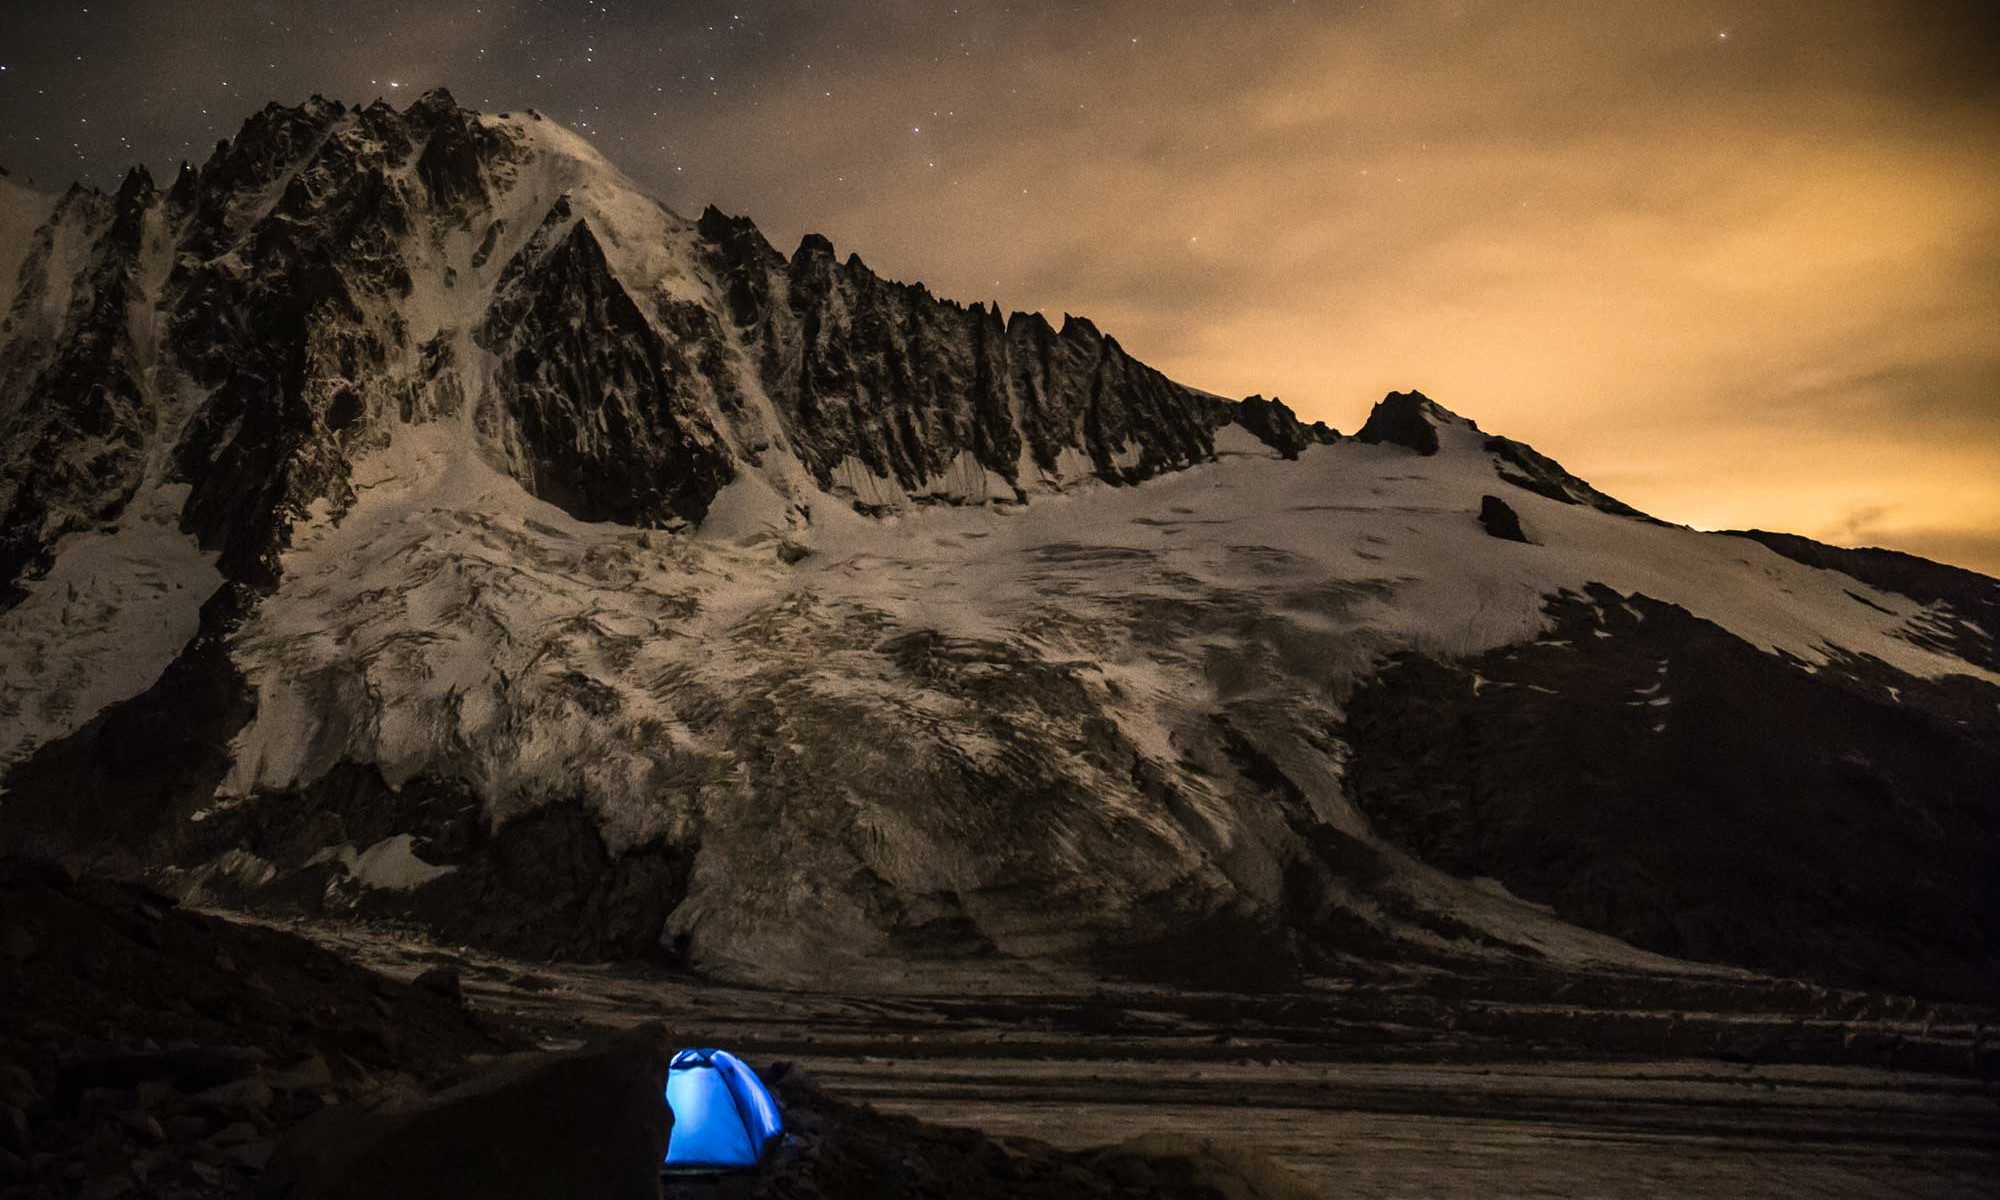 Blue Tente by Mountain Side